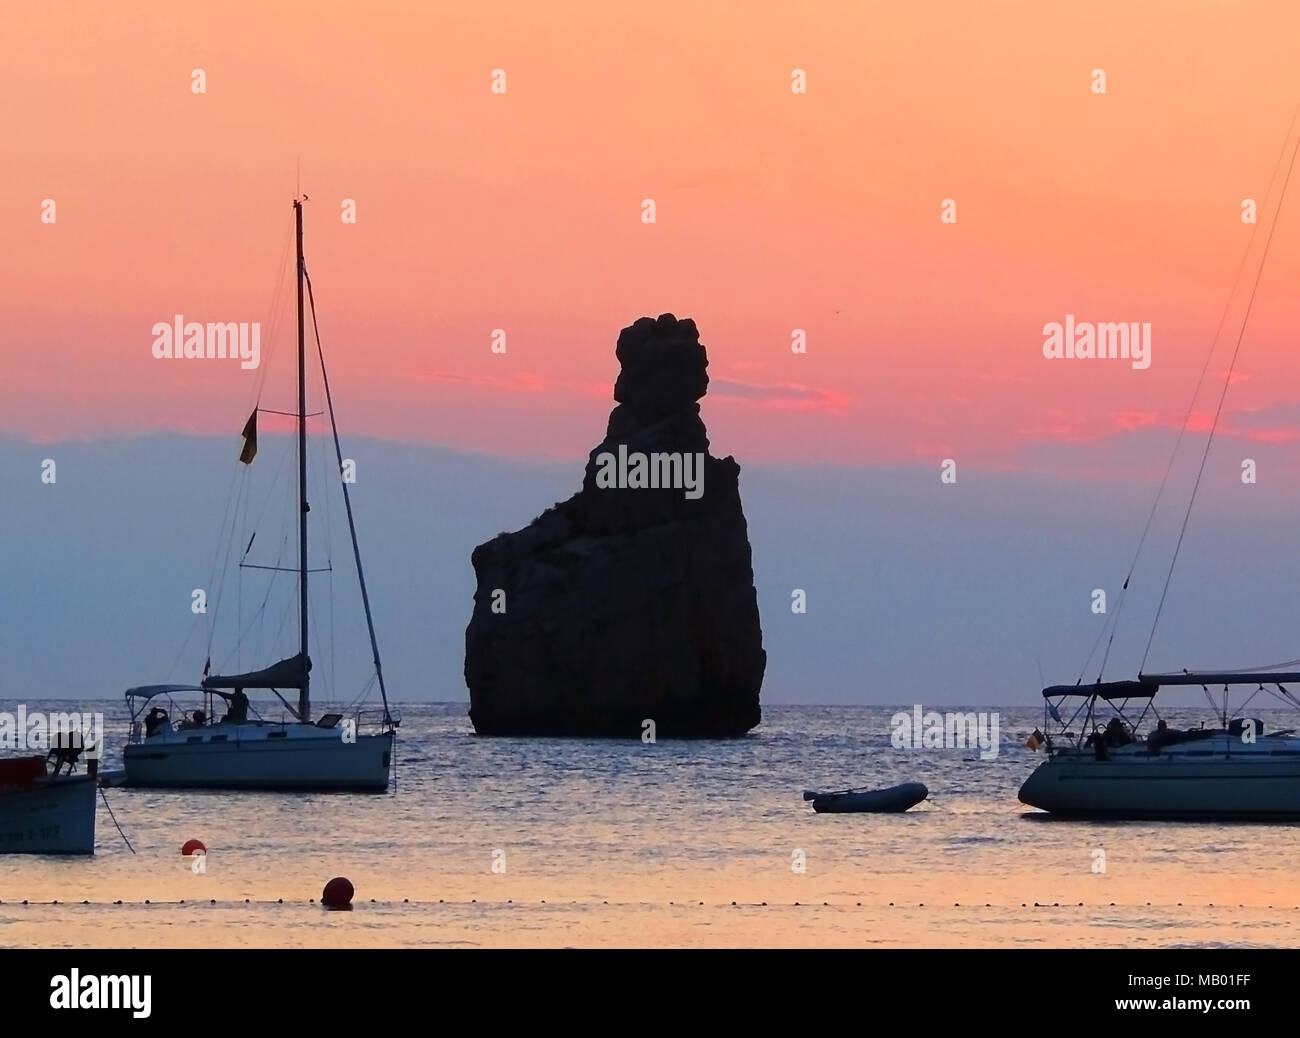 Sunset scene at Benirras beach, Ibiza Island. Rock formation and sunbeam, summer holiday scene. Stock Photo